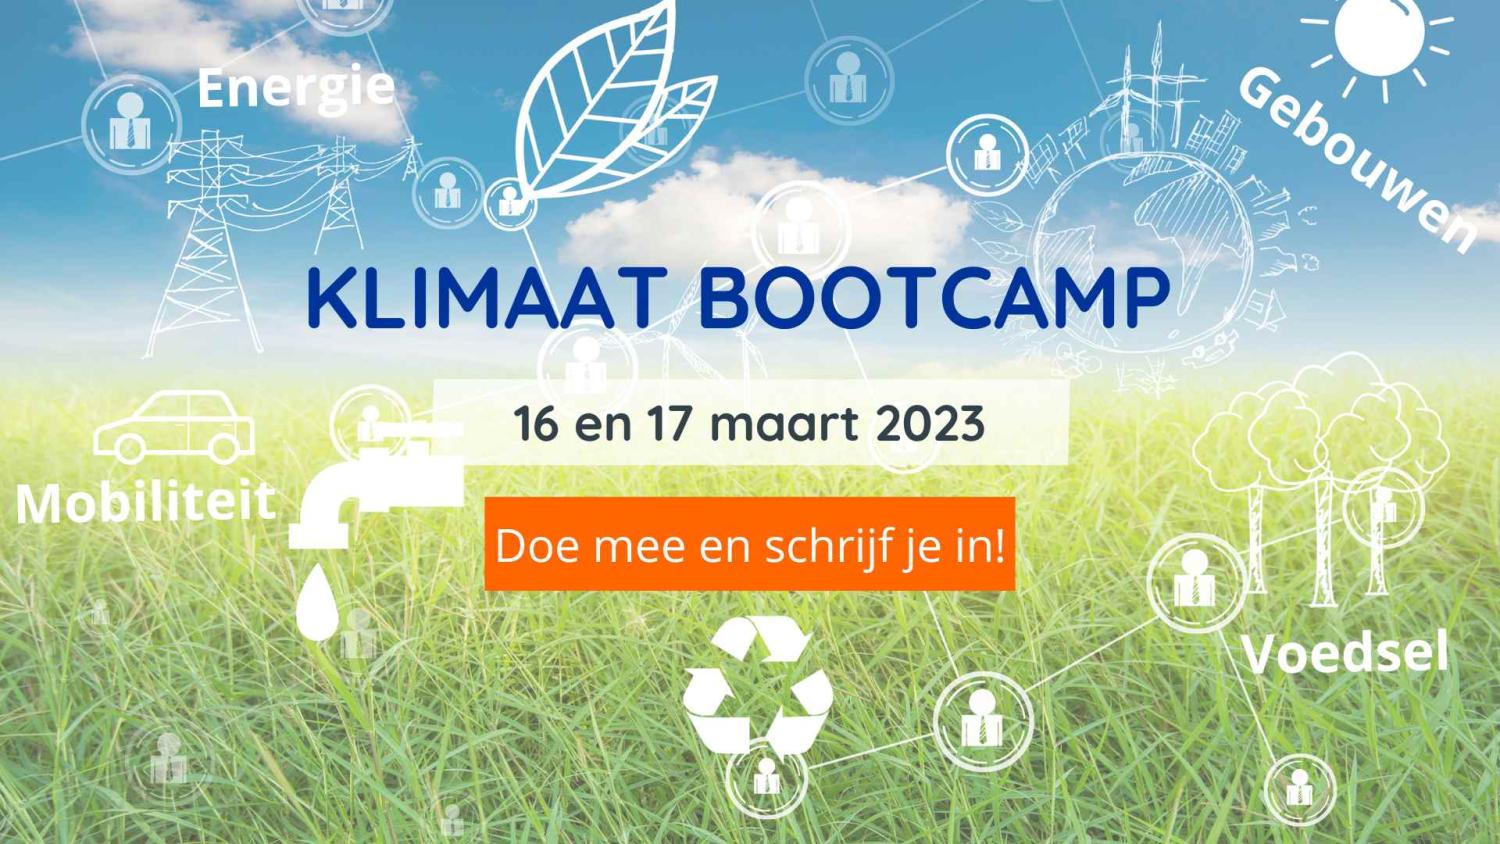 Klimaat bootcamp 2023